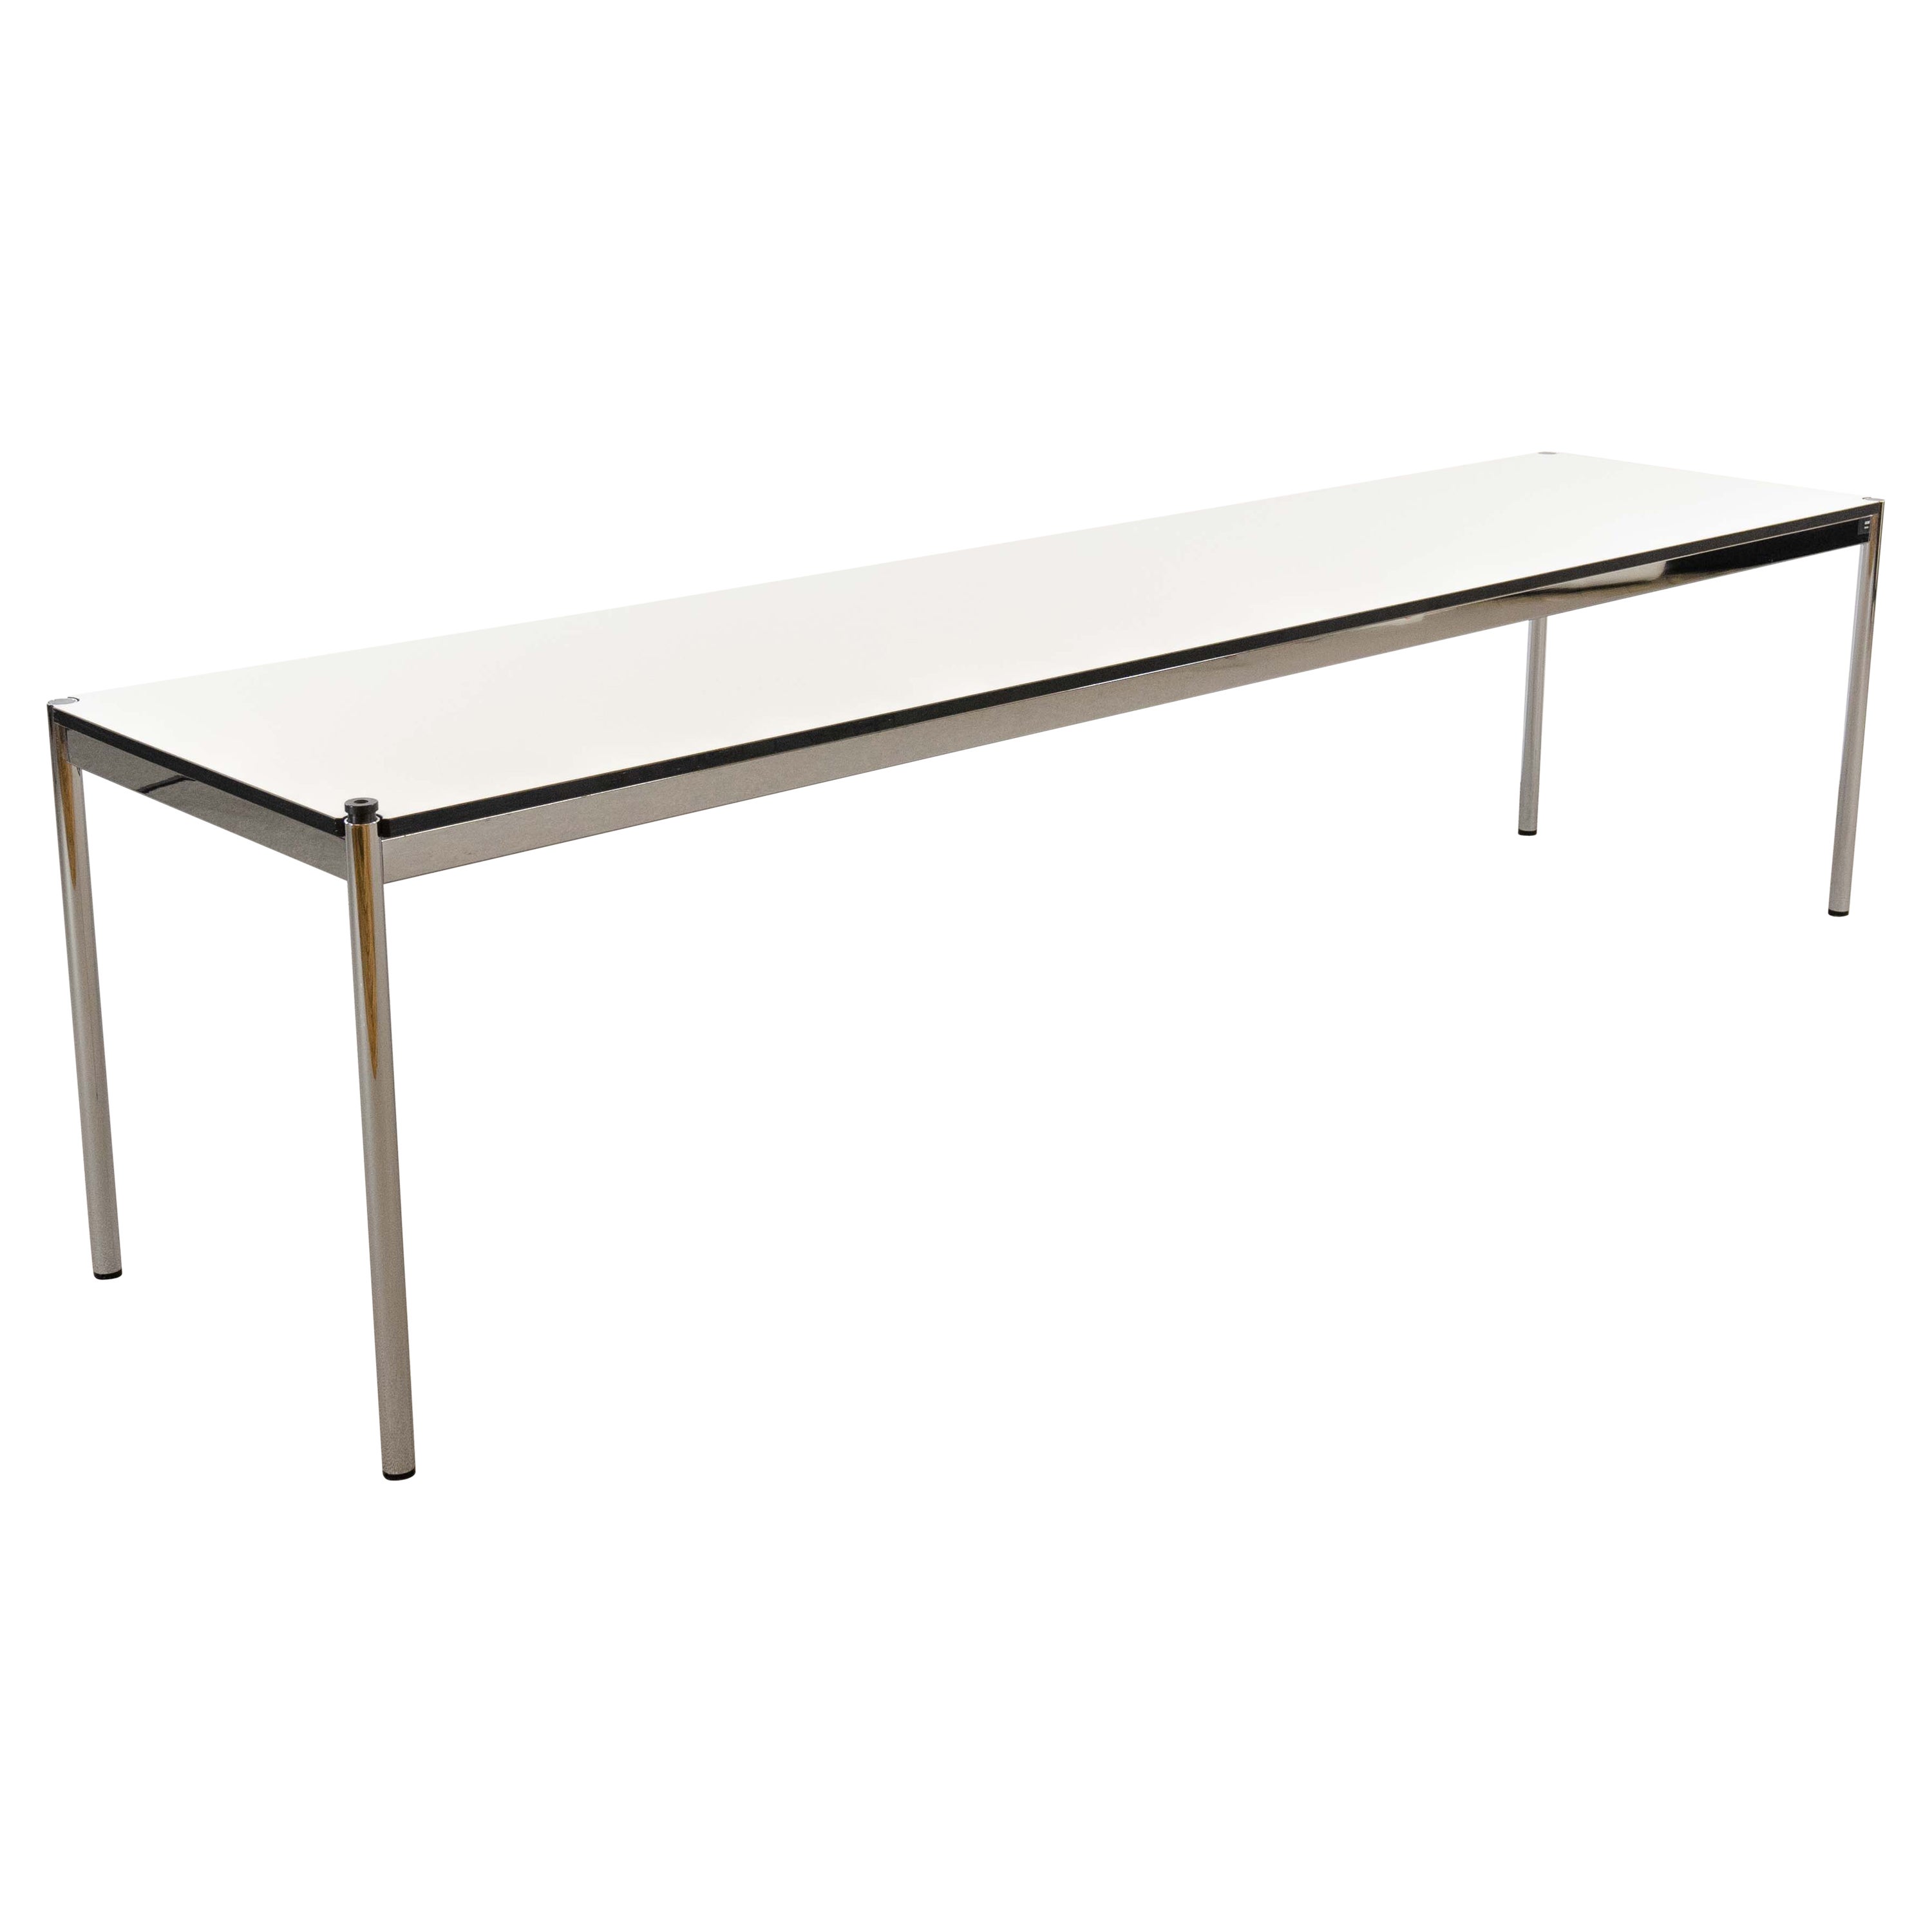 USM Haller Table - Desk - Conference Table by Fritz Haller, 300cmx75cm, white